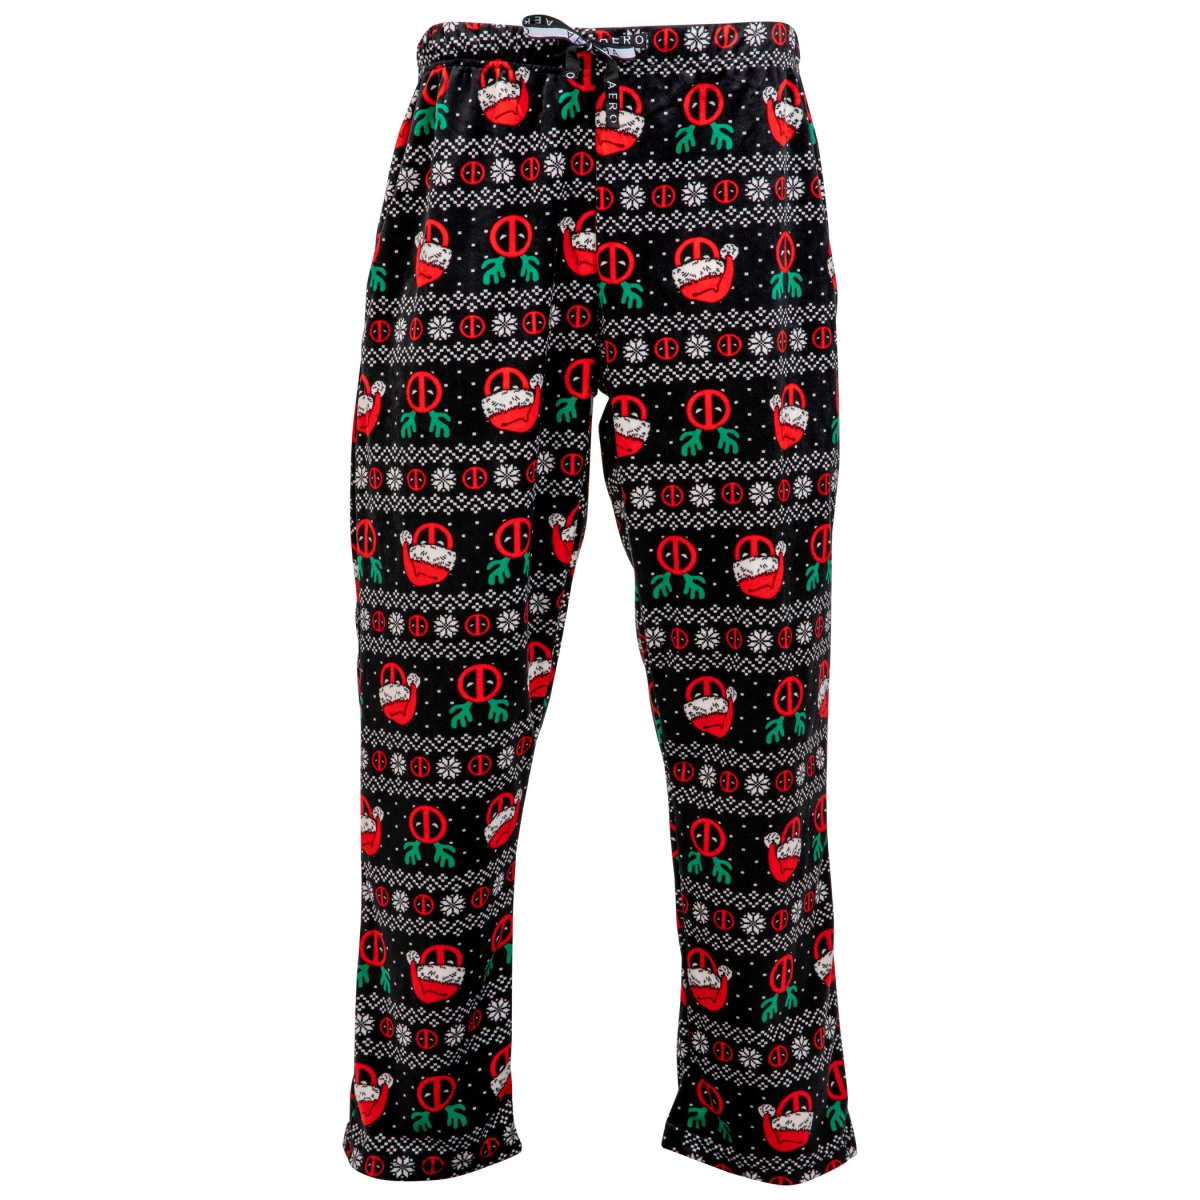 Picture of Deadpool 813502-large 36-38 Unisex Christmas Ugly Sweater Fleece Sleep Pants, Black - Large 36-38